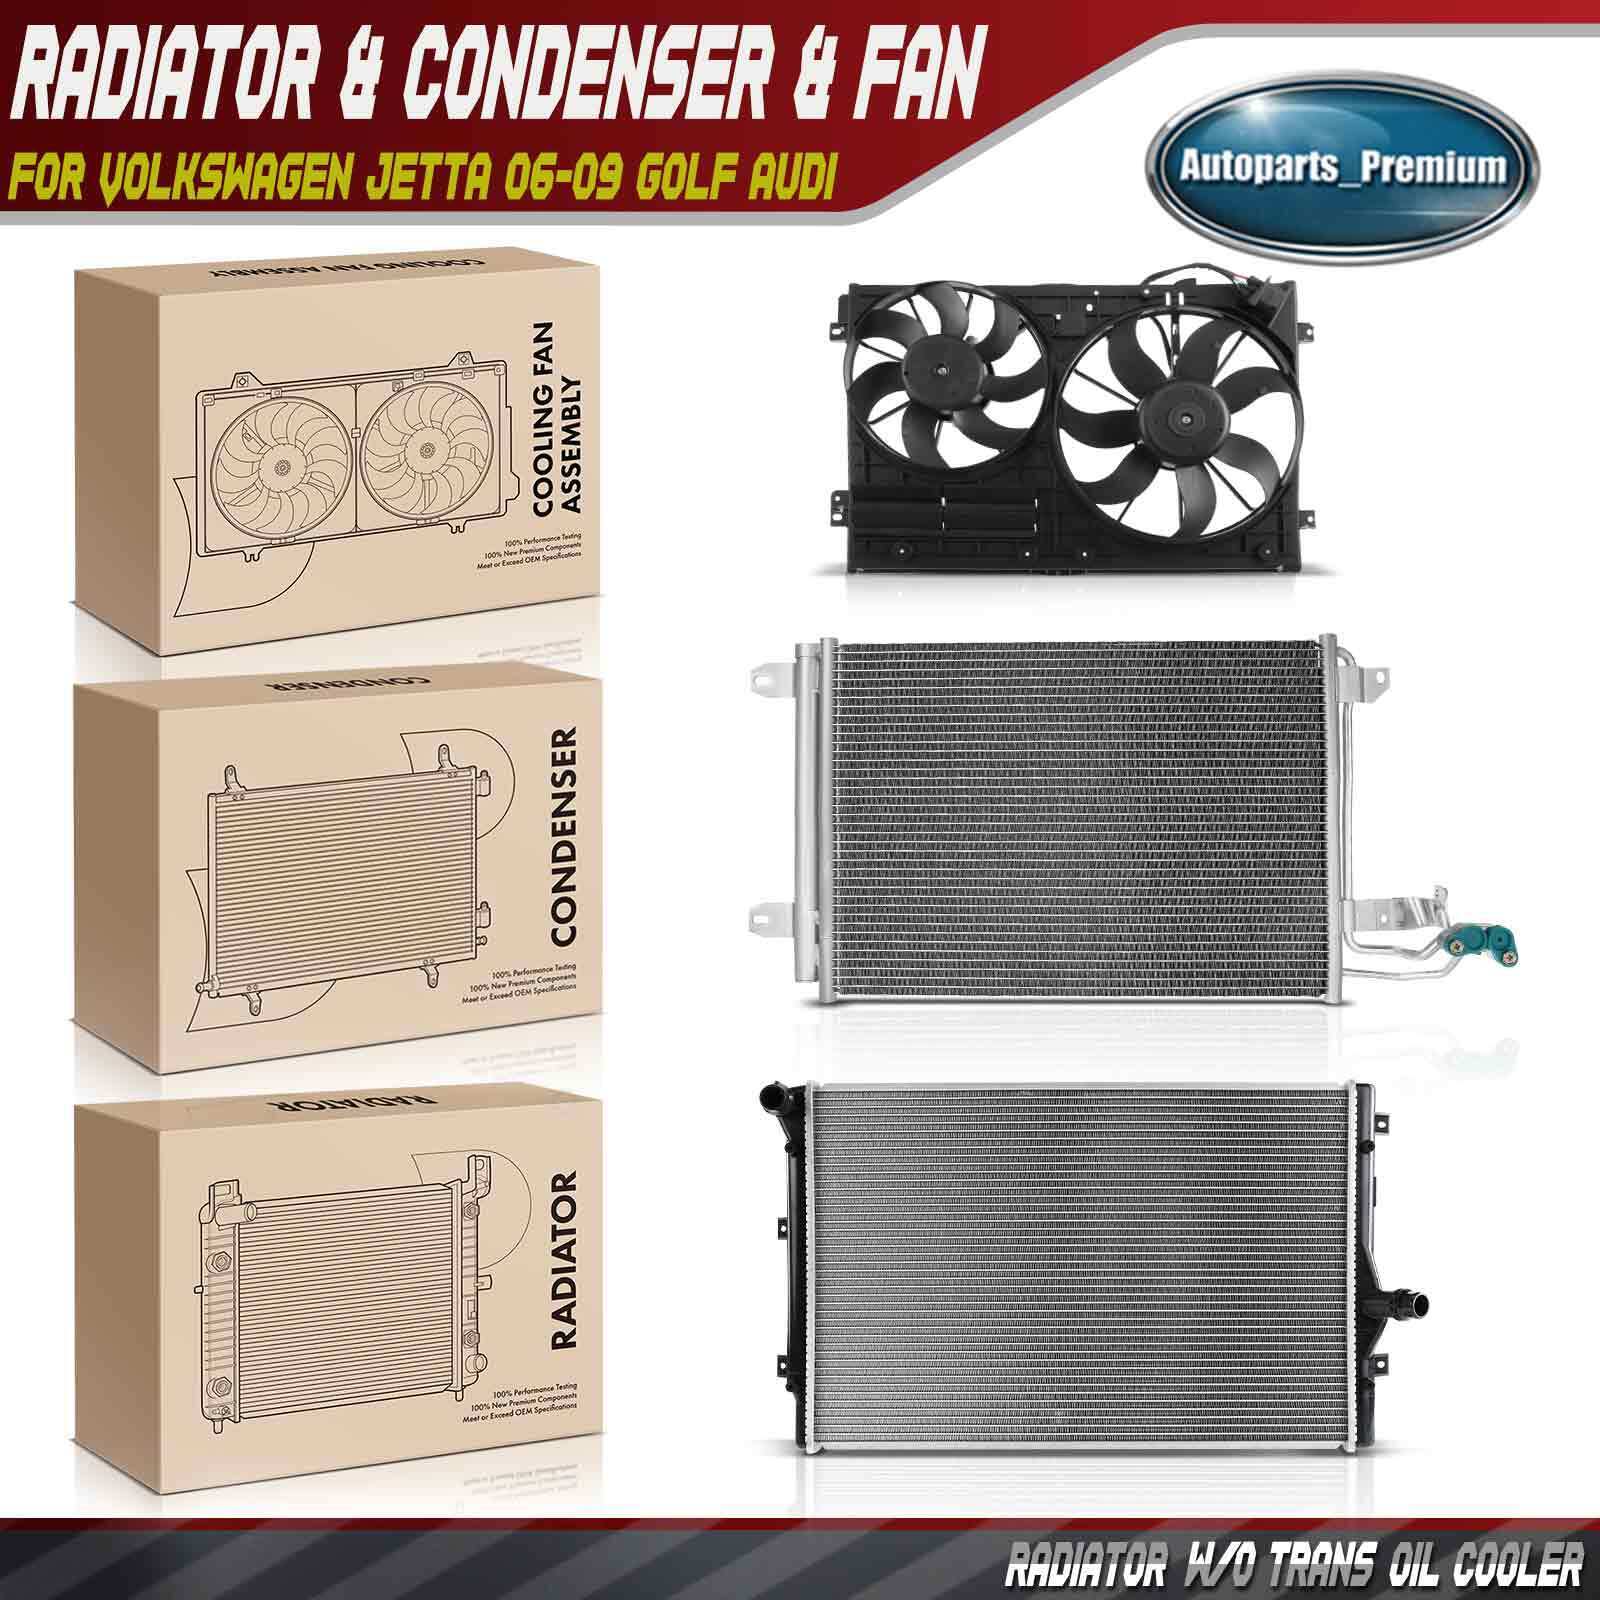 Radiator & AC Condenser & Cooling Fan Kit for Volkswagen Jetta 06-09 Golf Audi